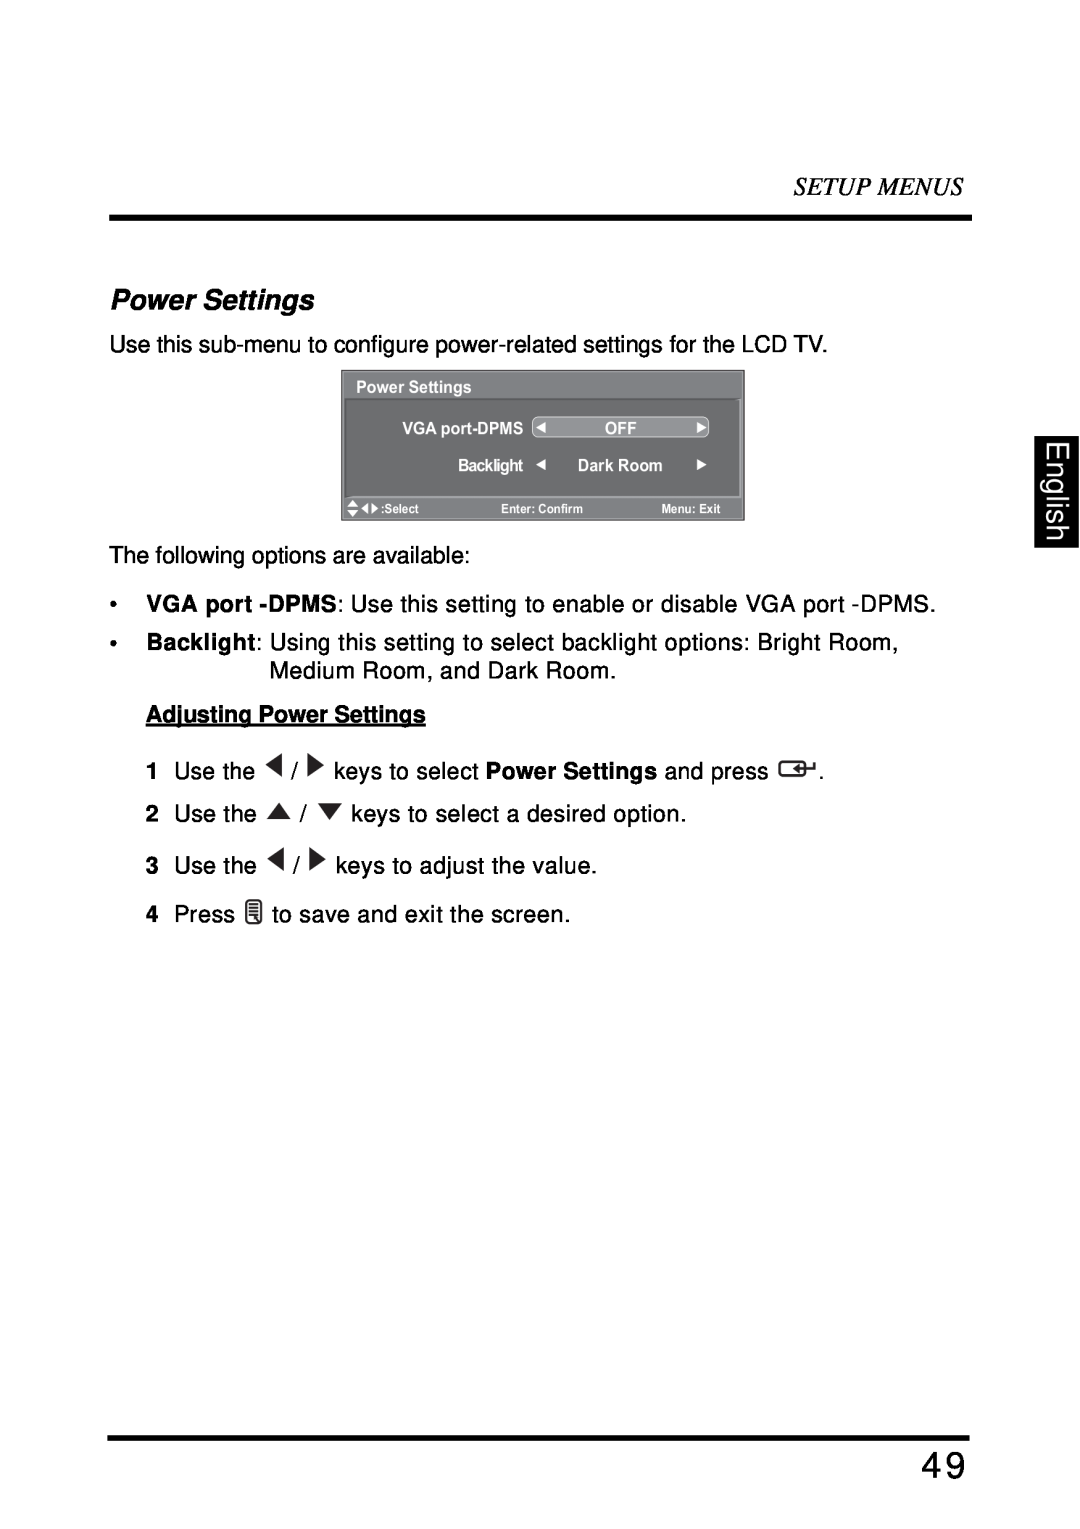 Westinghouse SK-32H640G user manual English, Setup Menus, Adjusting Power Settings 